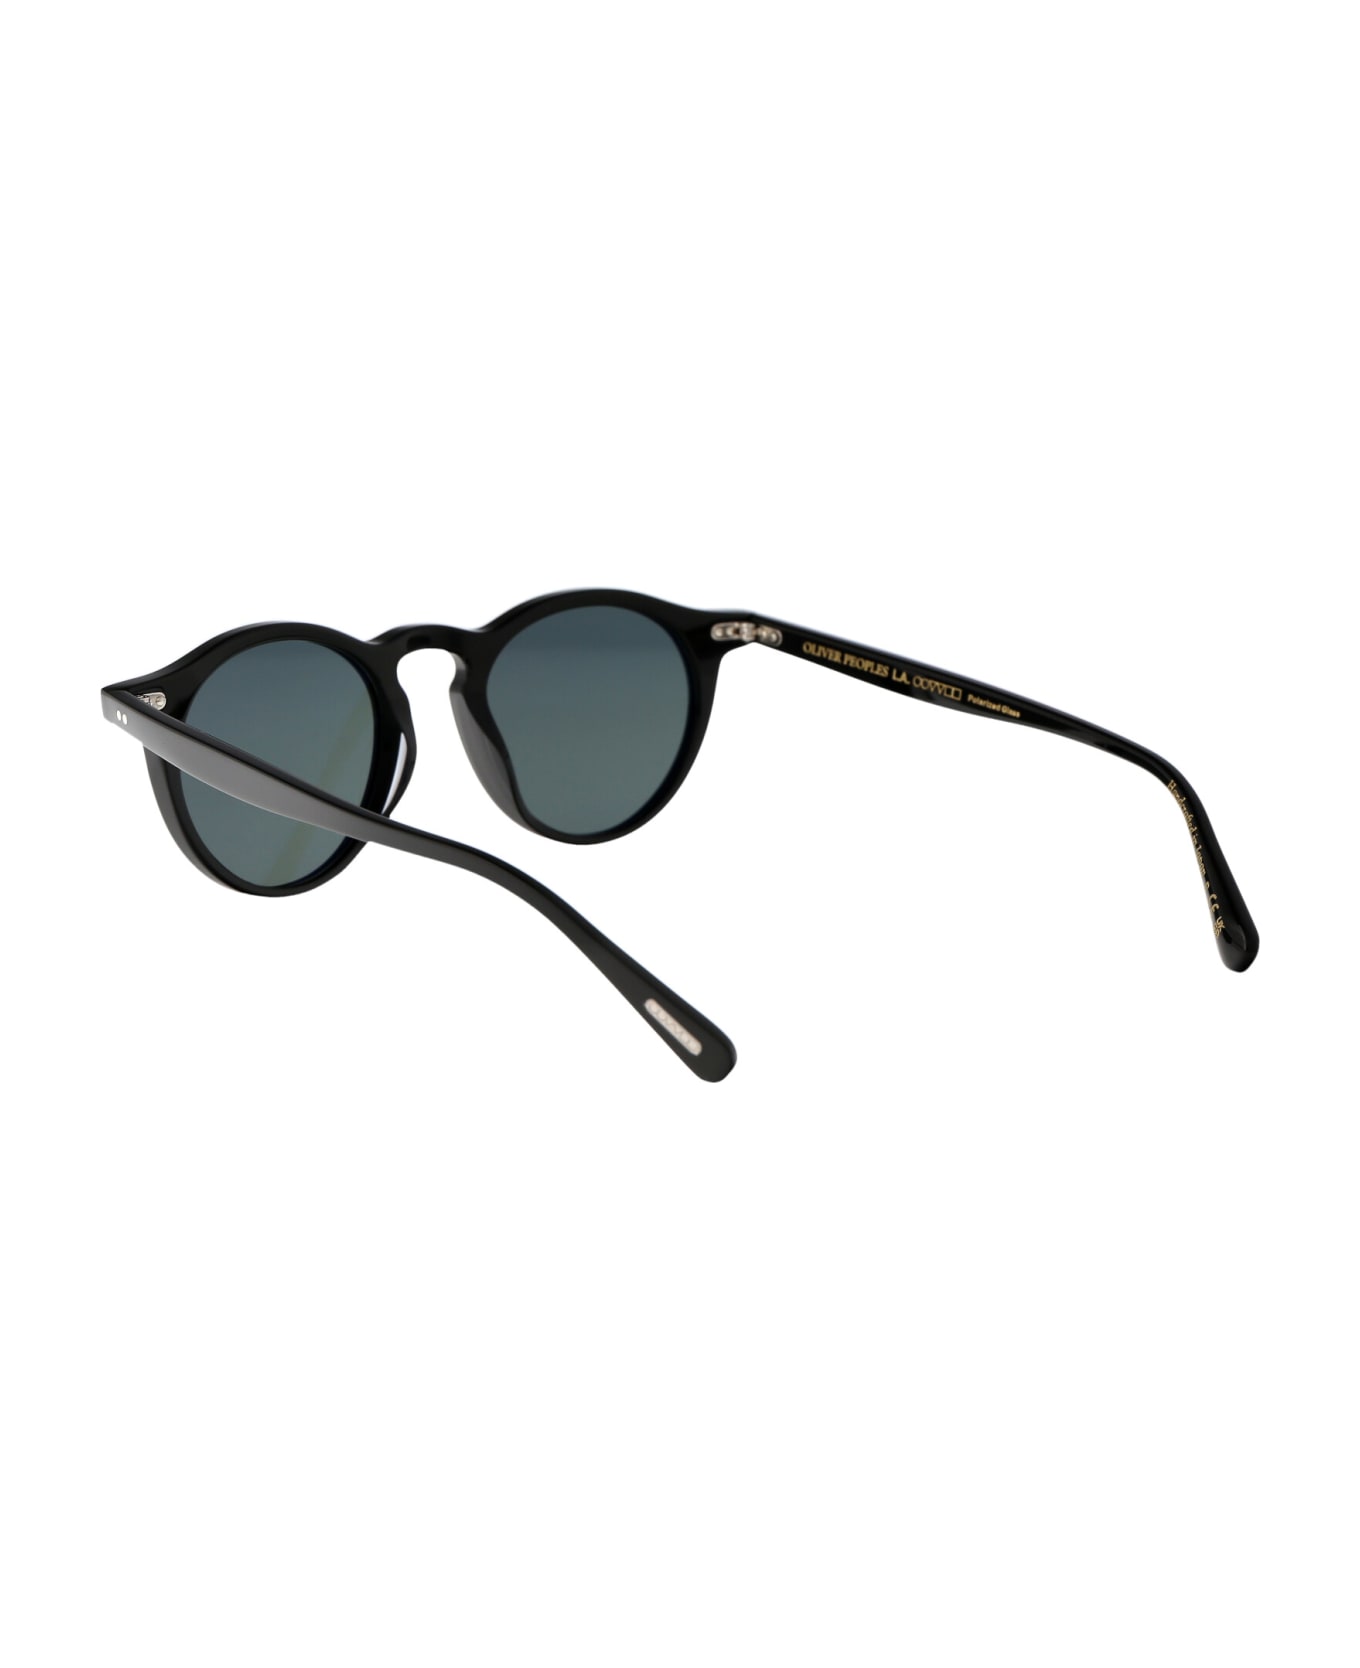 Oliver Peoples Op-13 Sun Sunglasses - 1731P2 Black